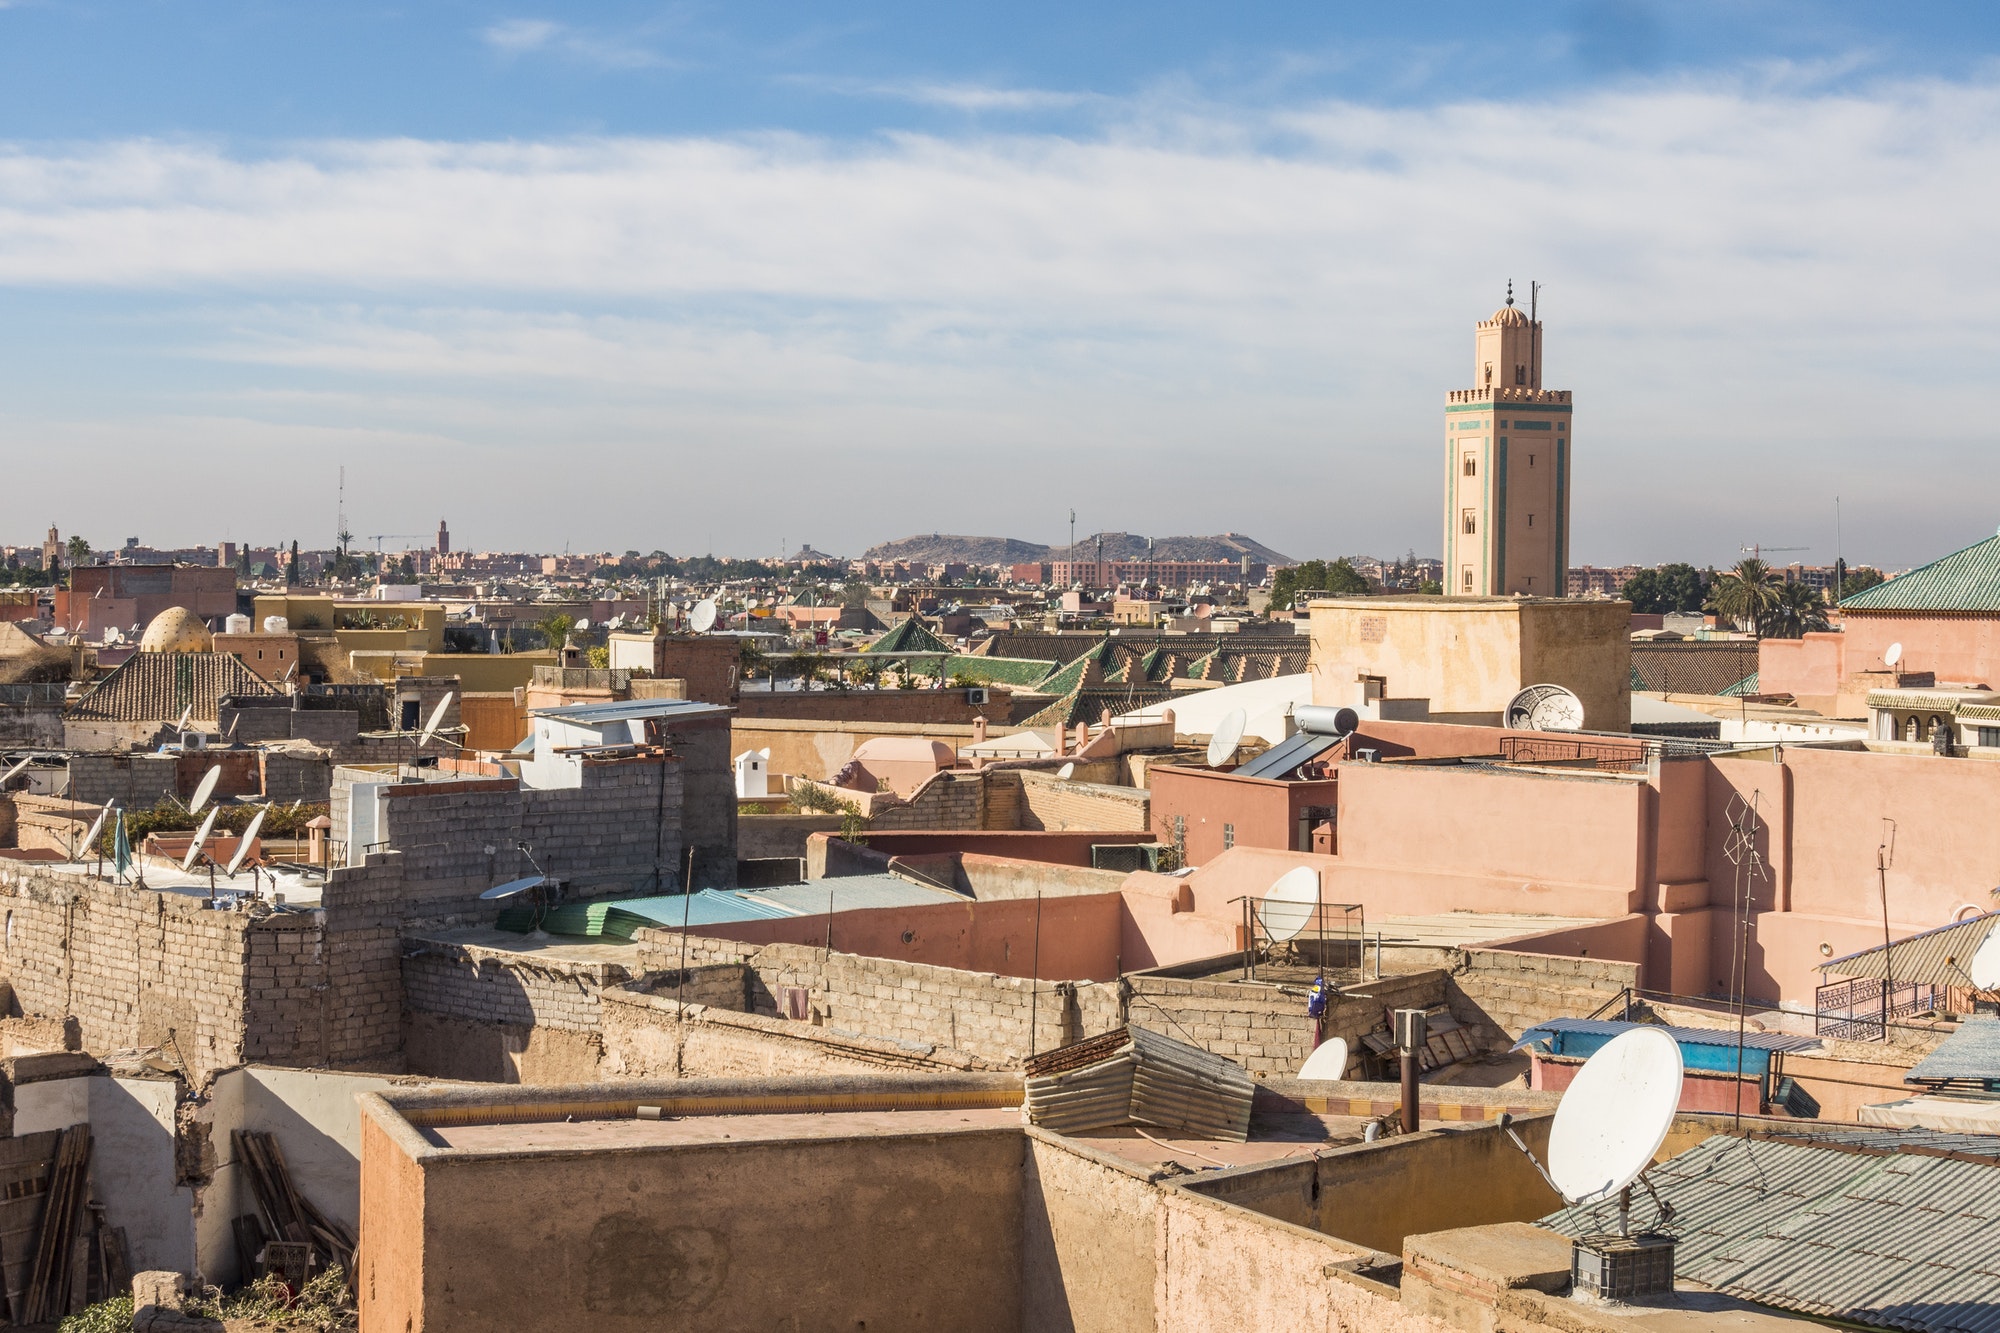 Beautiful Marrakech city skyline, Medina region, and Marrakech-Safi region in Morocco